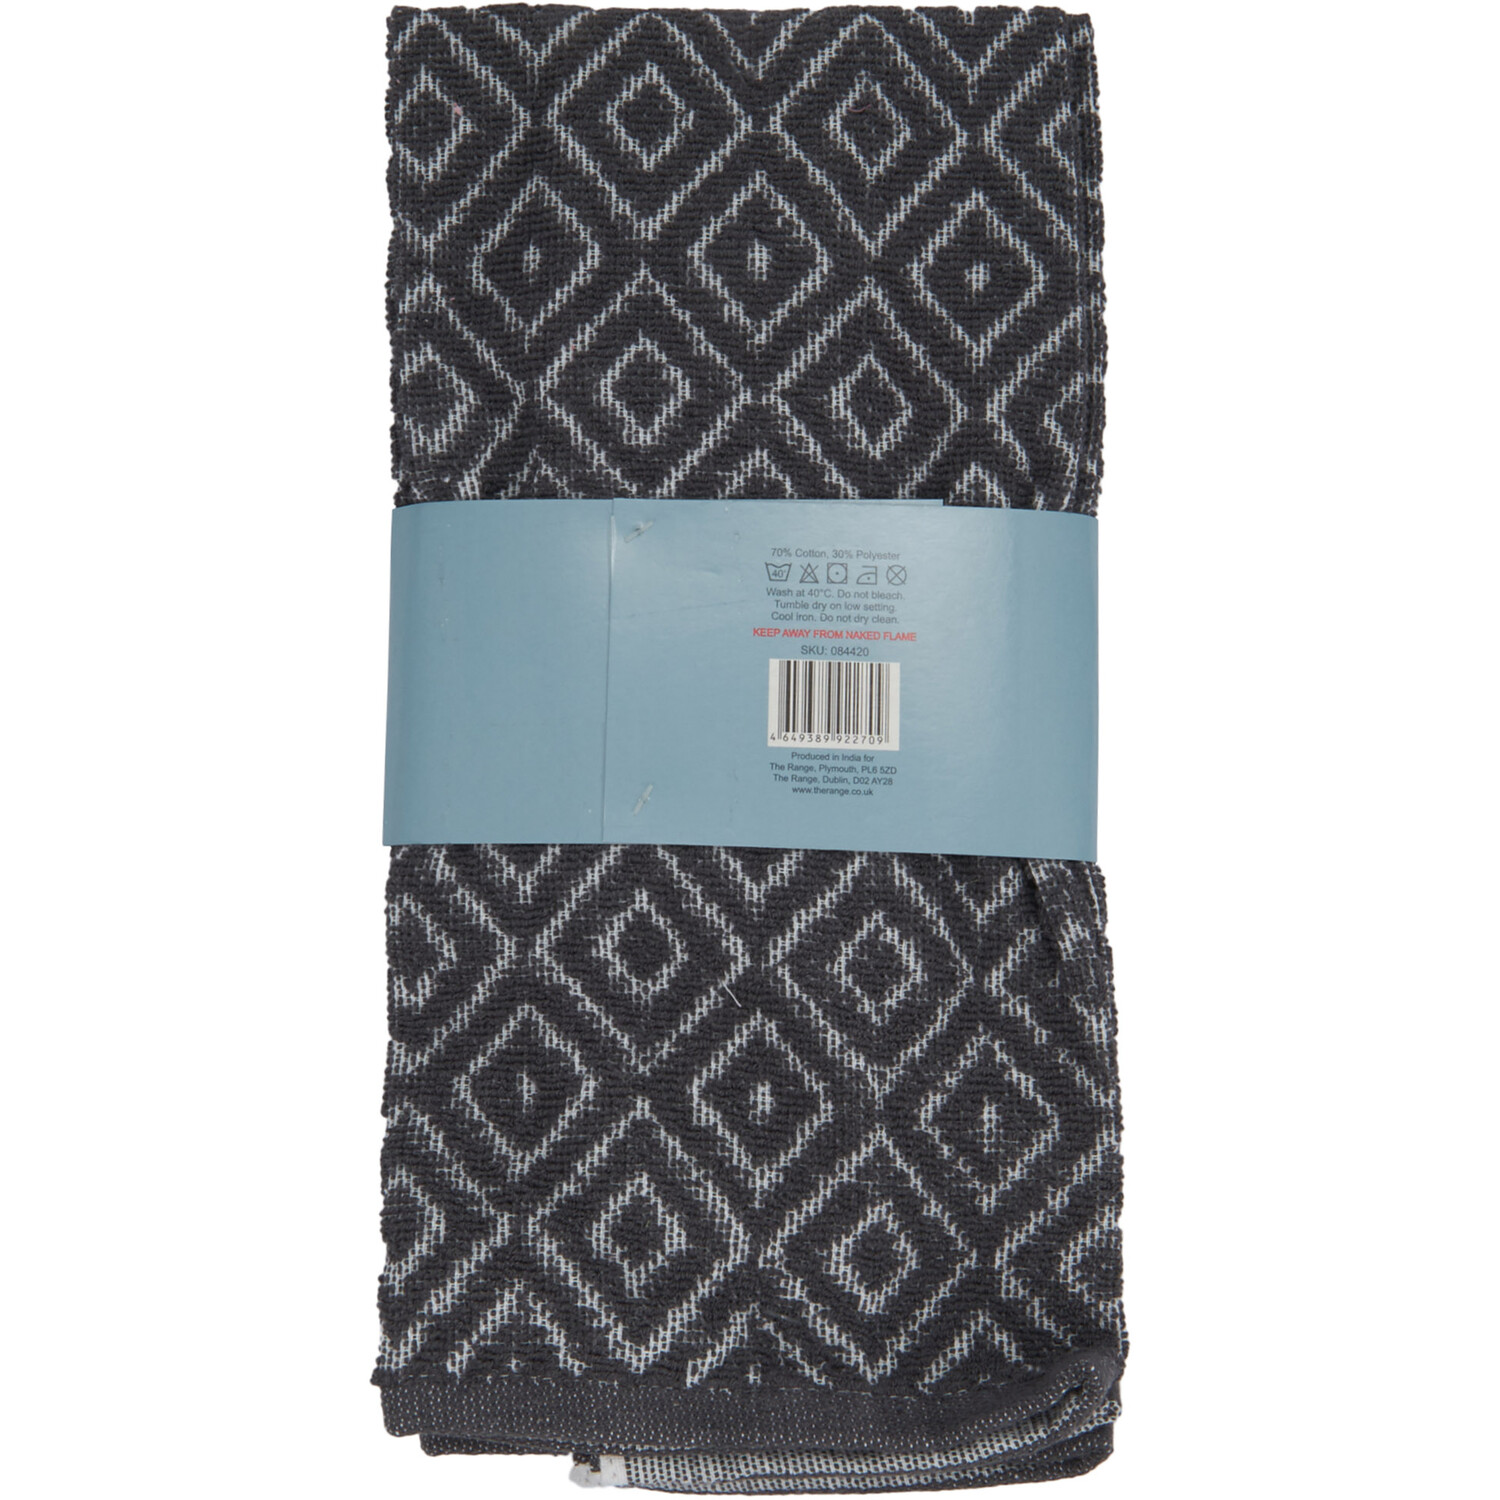 Essentials Polycotton Black Diamond Textured Terry Towel 2 Pack Image 2